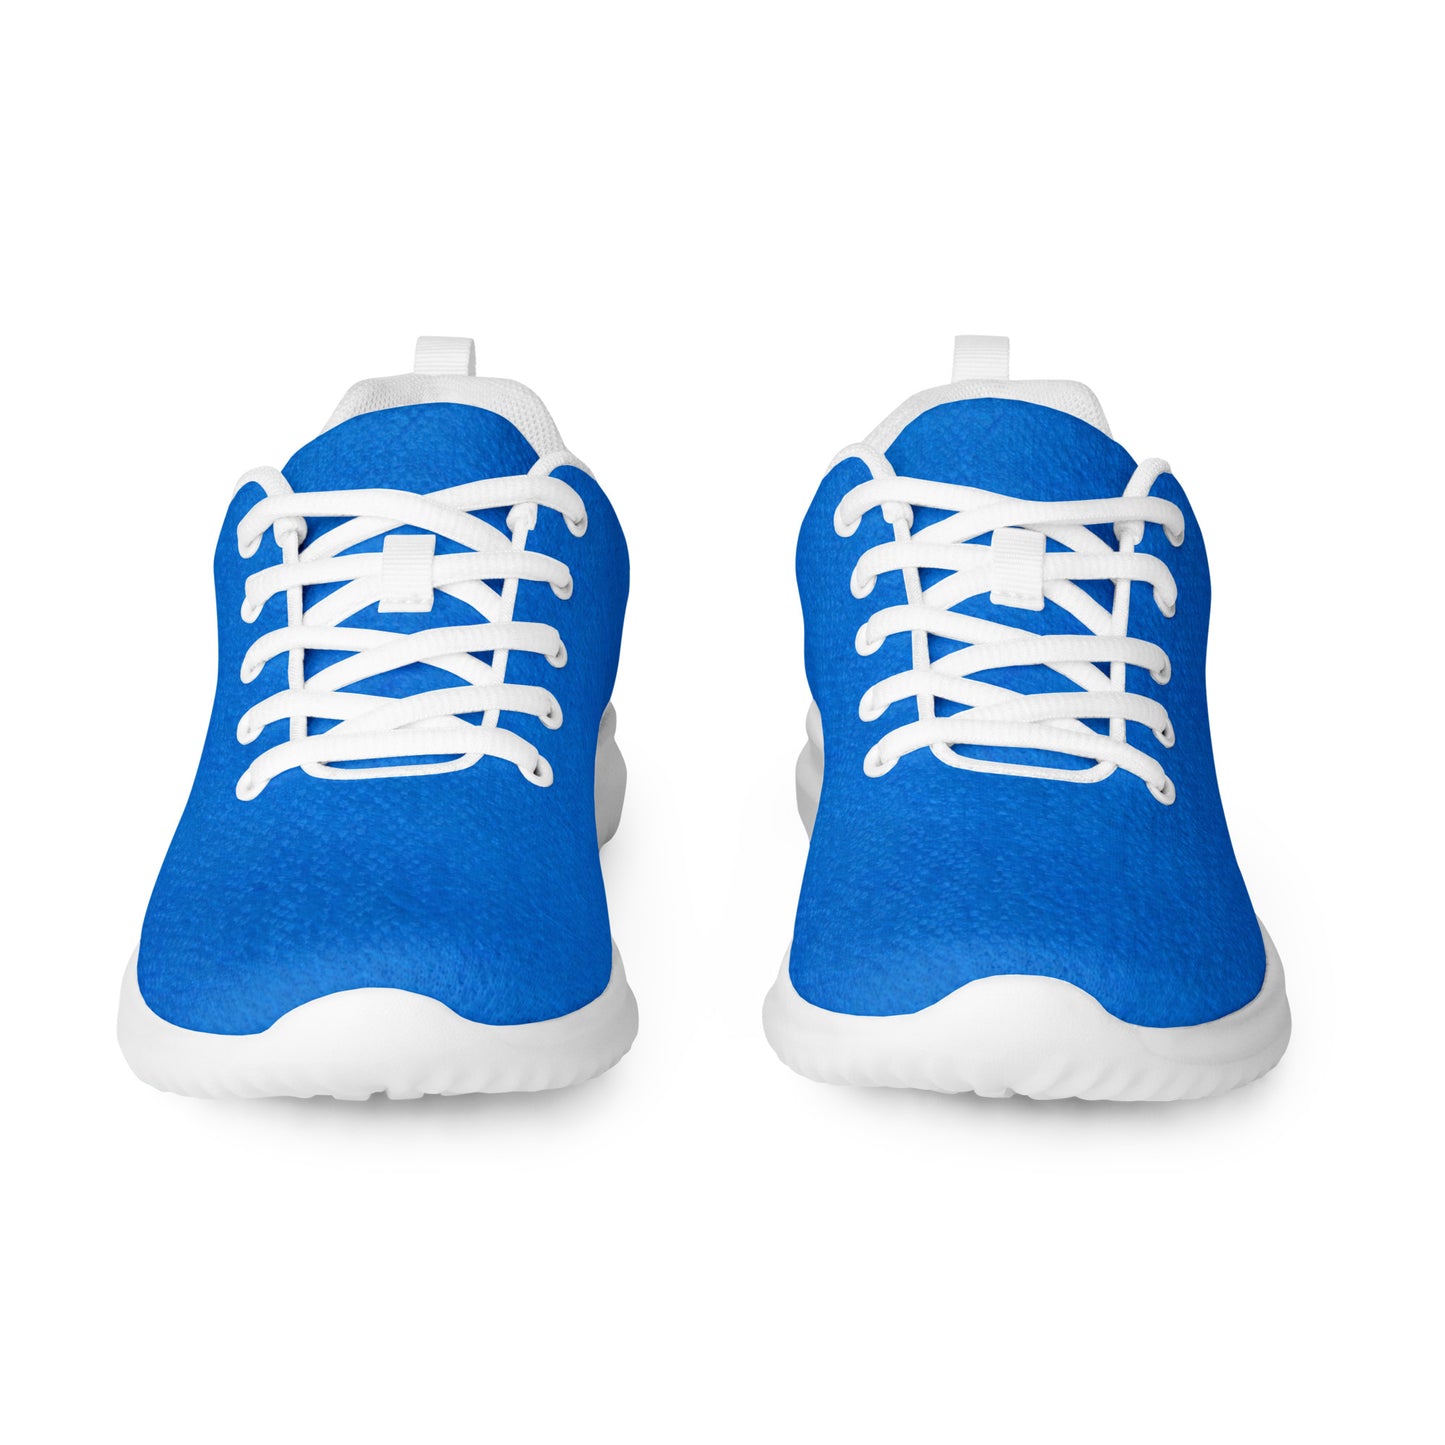 DASH Cobalt Blue Women’s Athletic Shoes Lightweight Breathable Design by IOBI Original Apparel